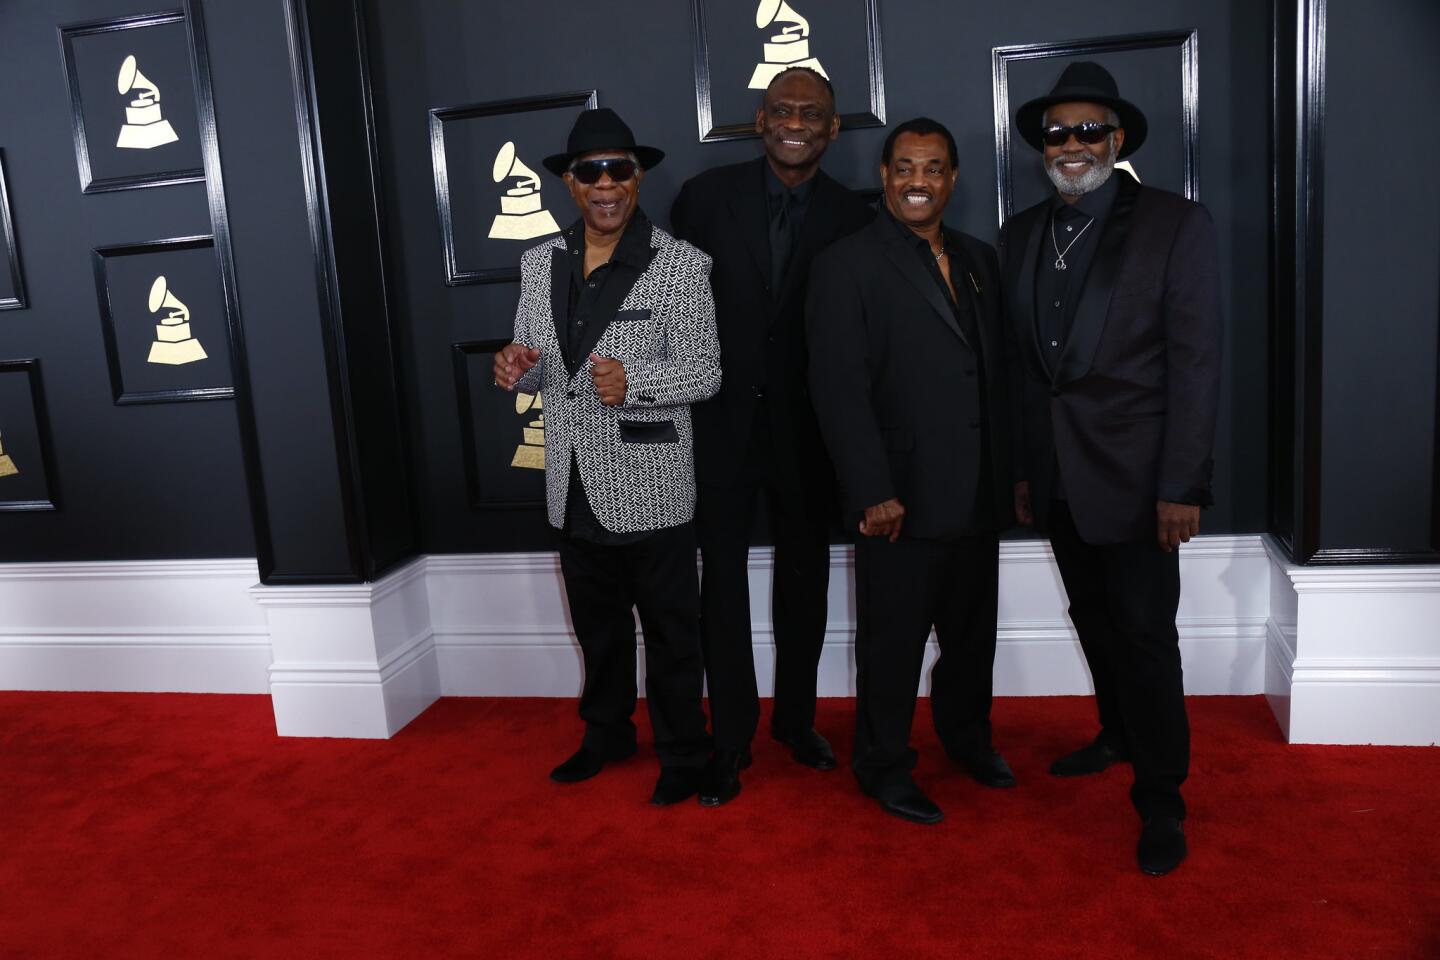 Grammys 2017 | Red carpet arrivals